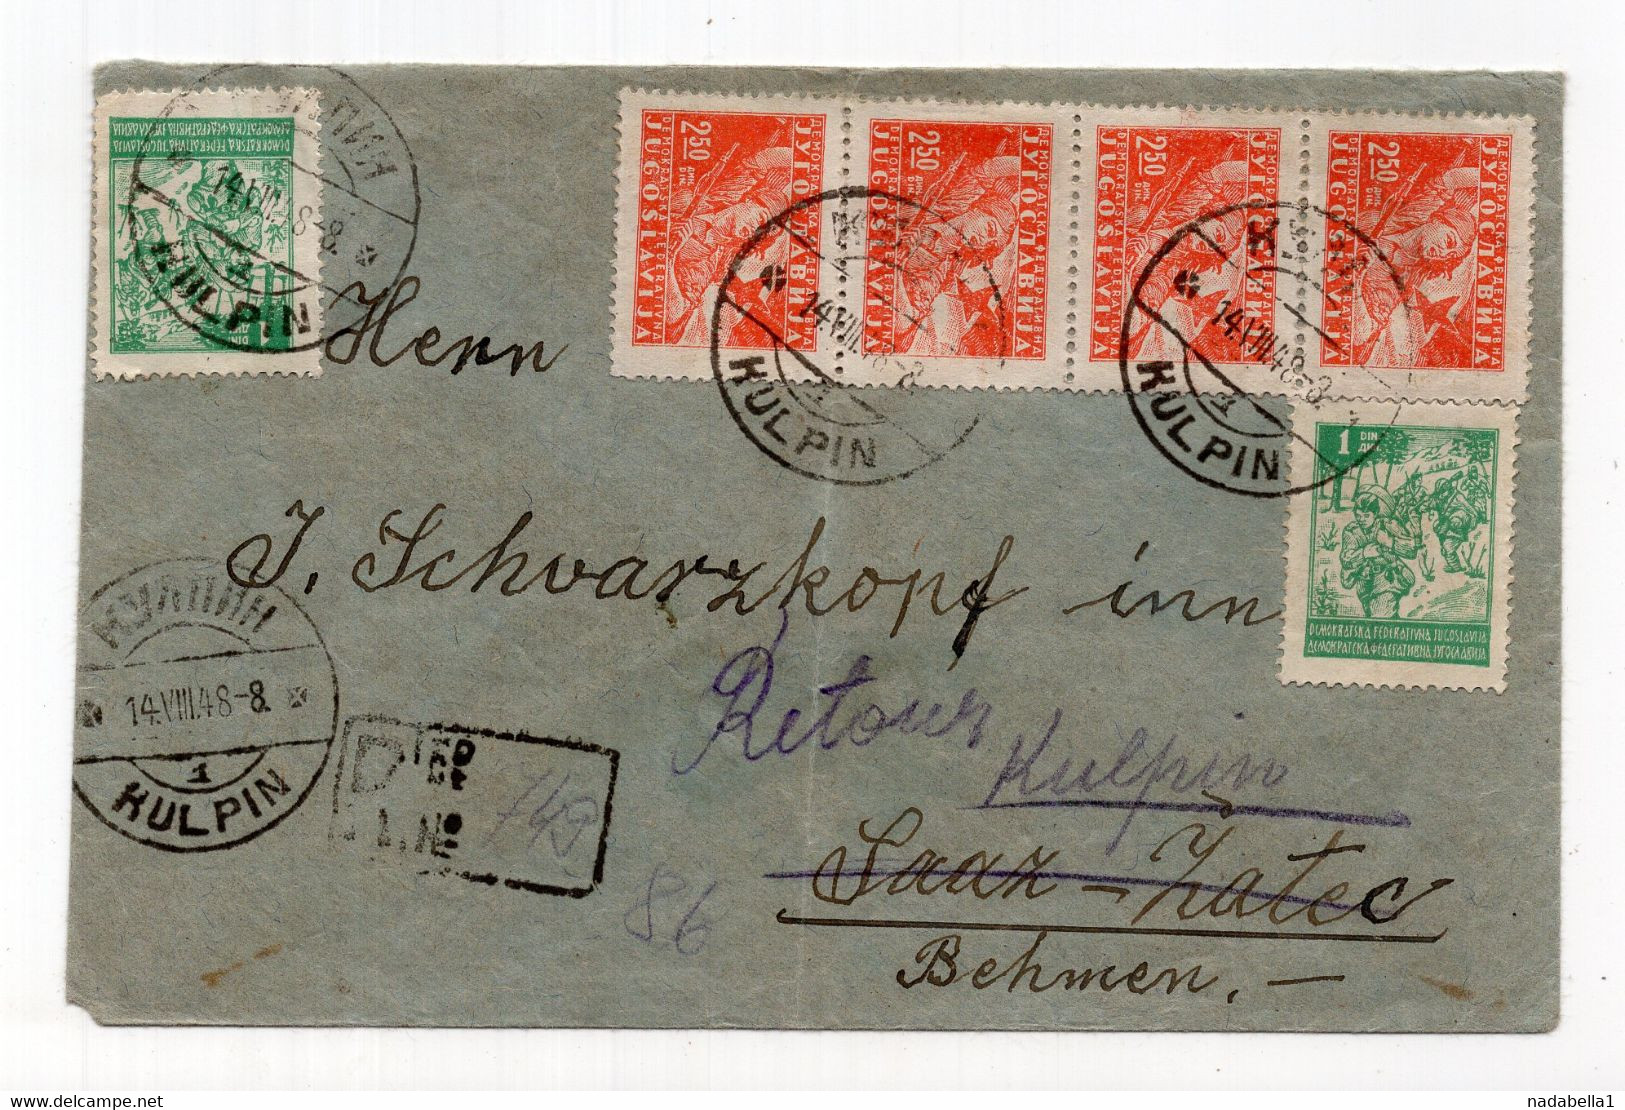 1948. YUGOSLAVIA,SERBIA,KULPIN TO CSR,REGISTERED COVER,RETURNED,LABEL INCONNU - Luftpost